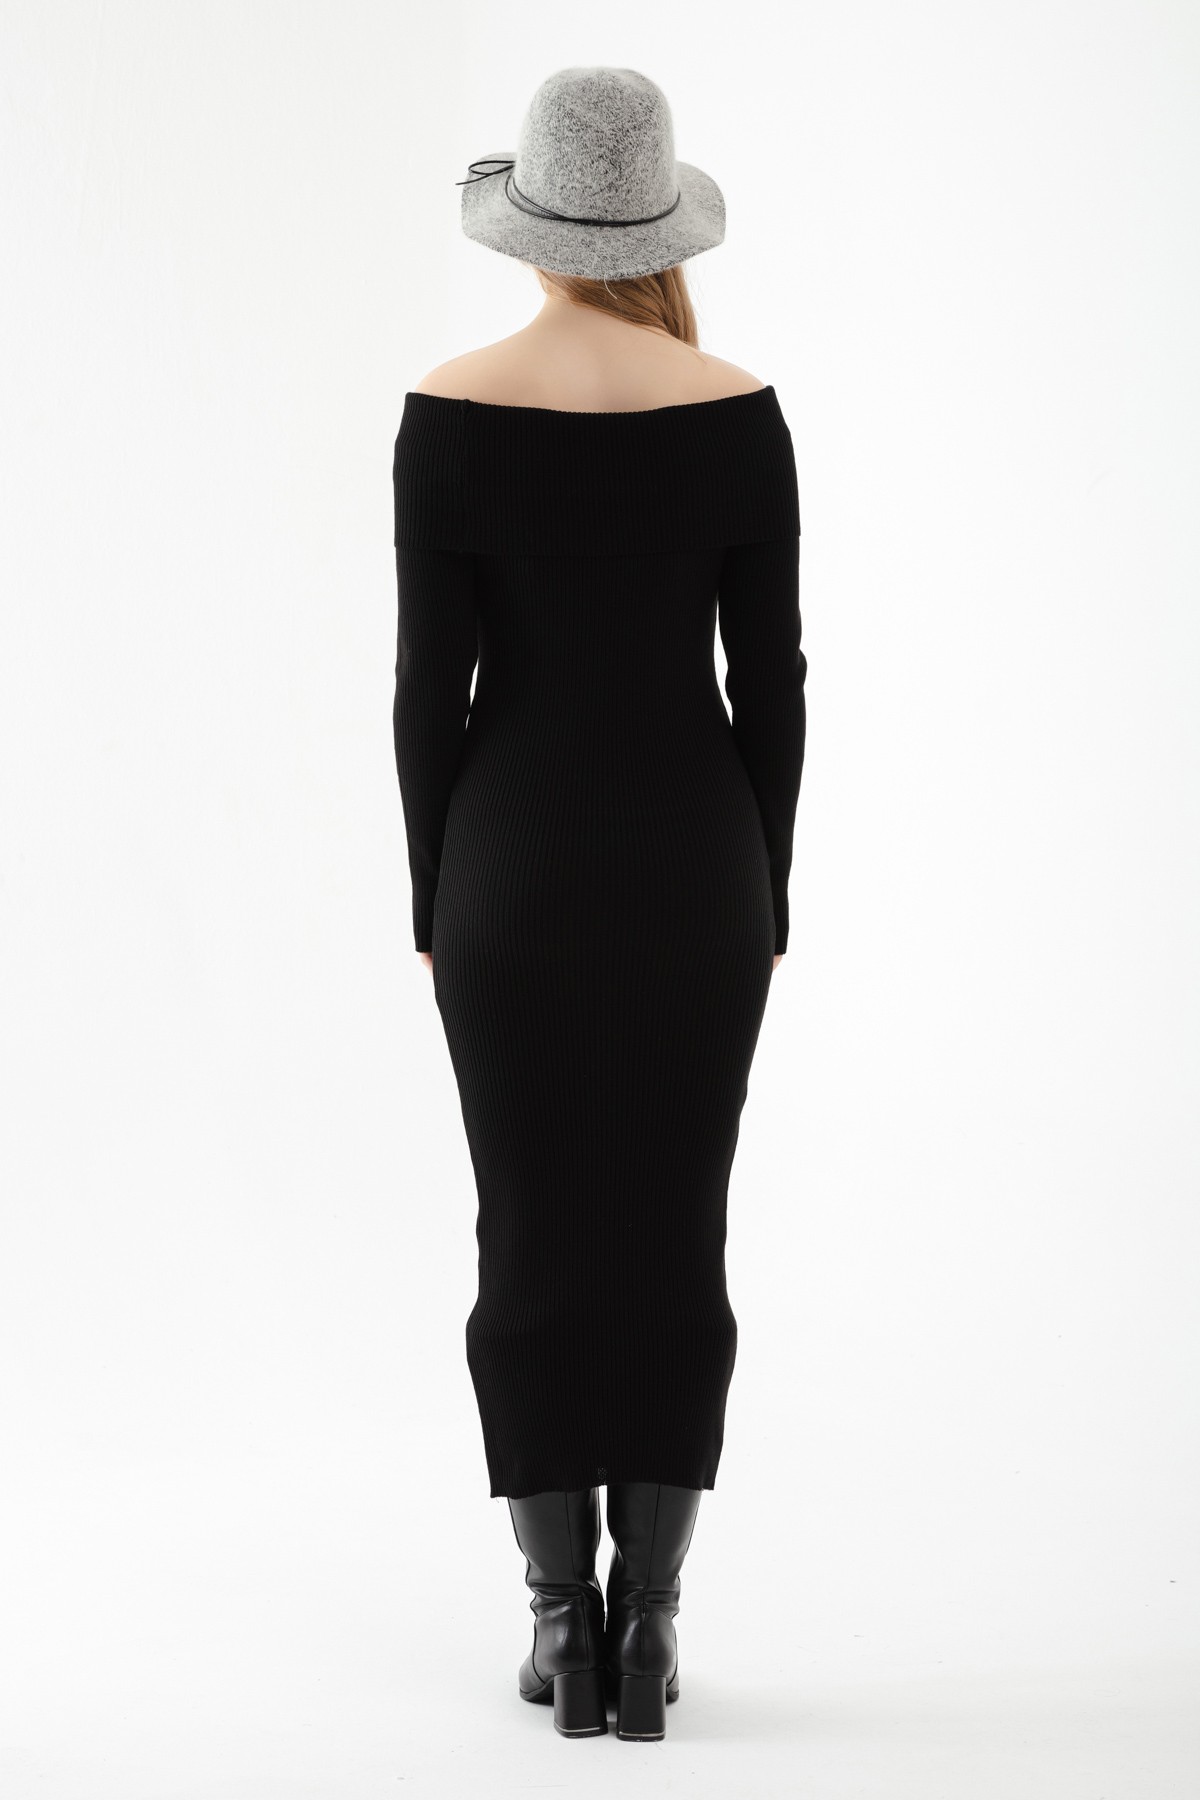 Katlı Carmen Yaka Fitilli Triko Elbise - Siyah